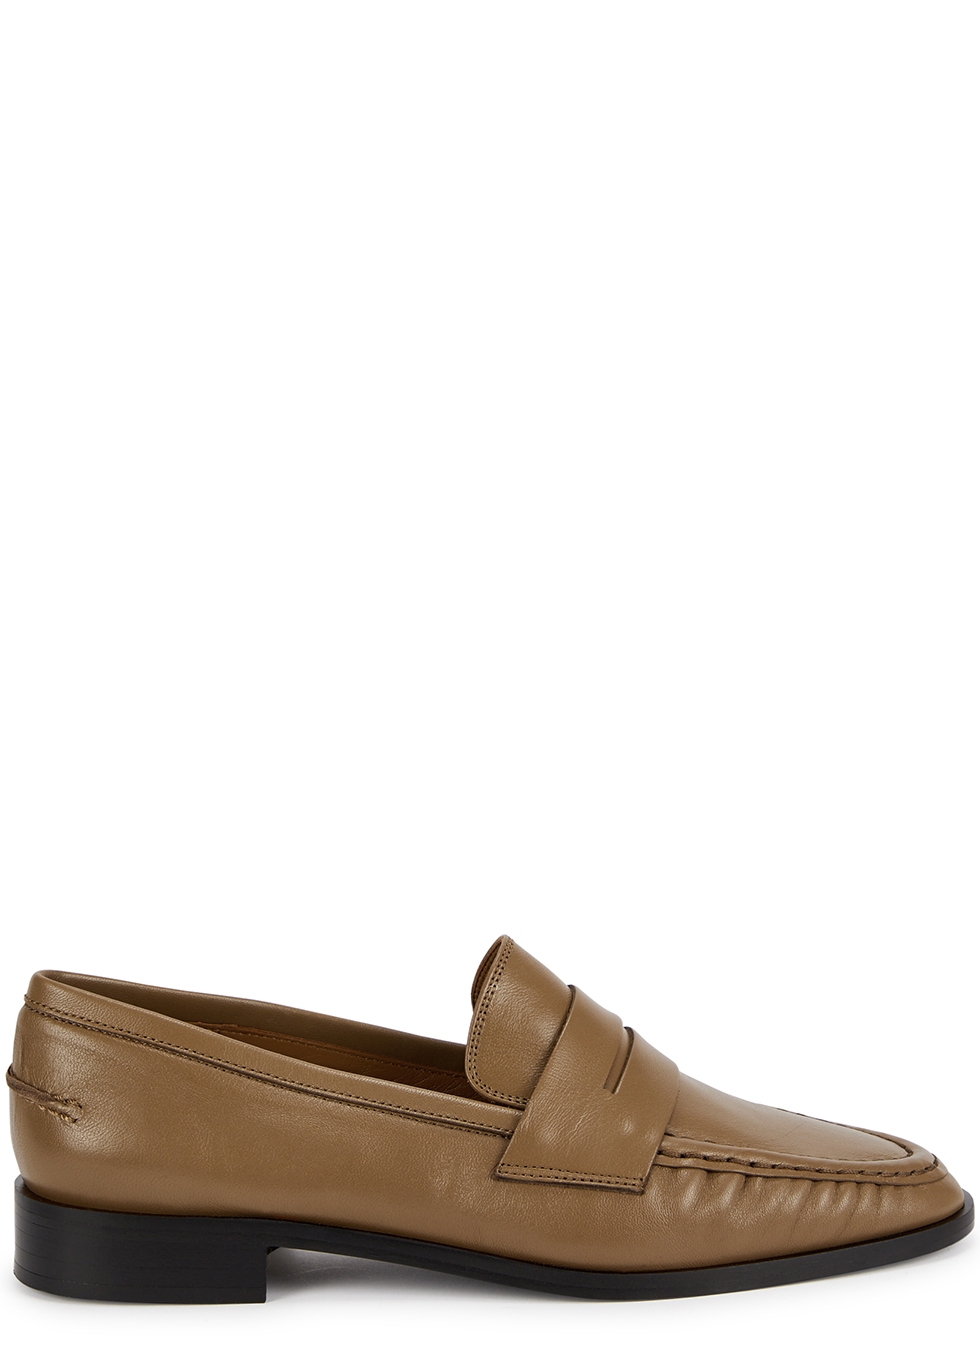 ATP Atelier Airola leather loafers - Harvey Nichols